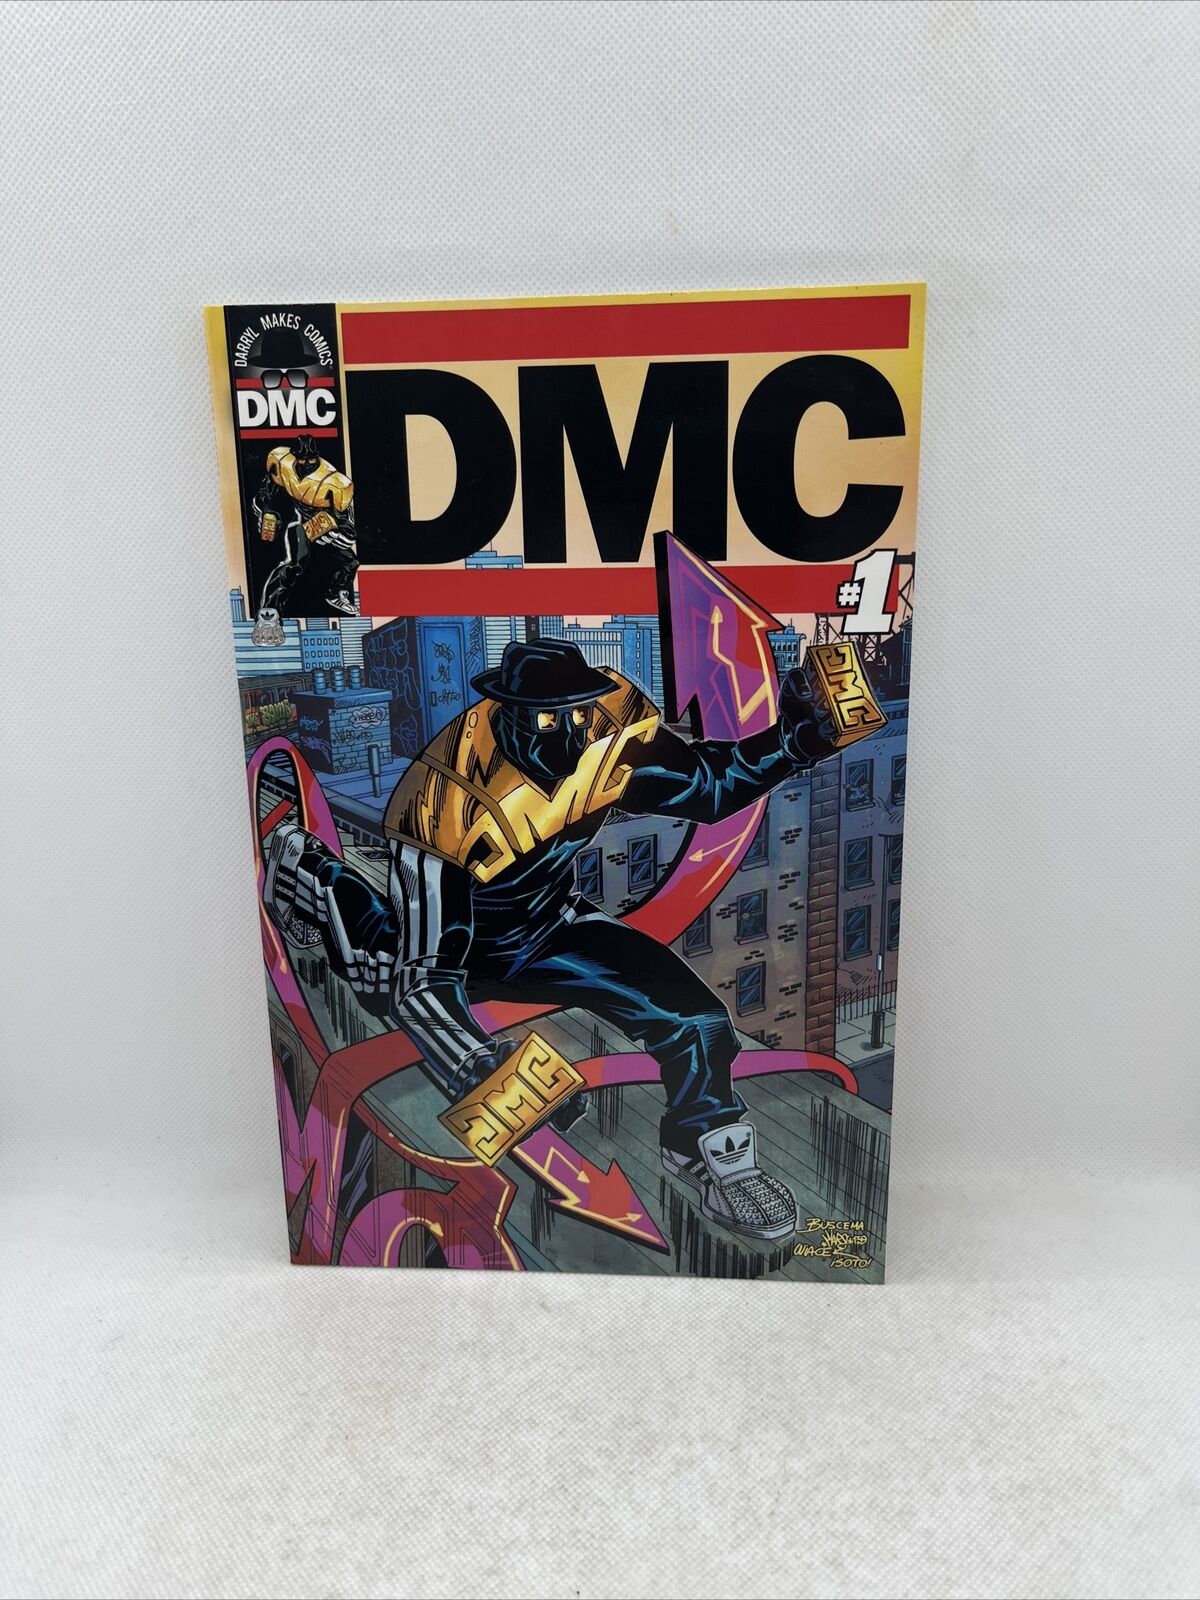 DMC Volume 1 Graphic Novel Darryl Makes Comics Run-DMC Rap Group Tie In Comic